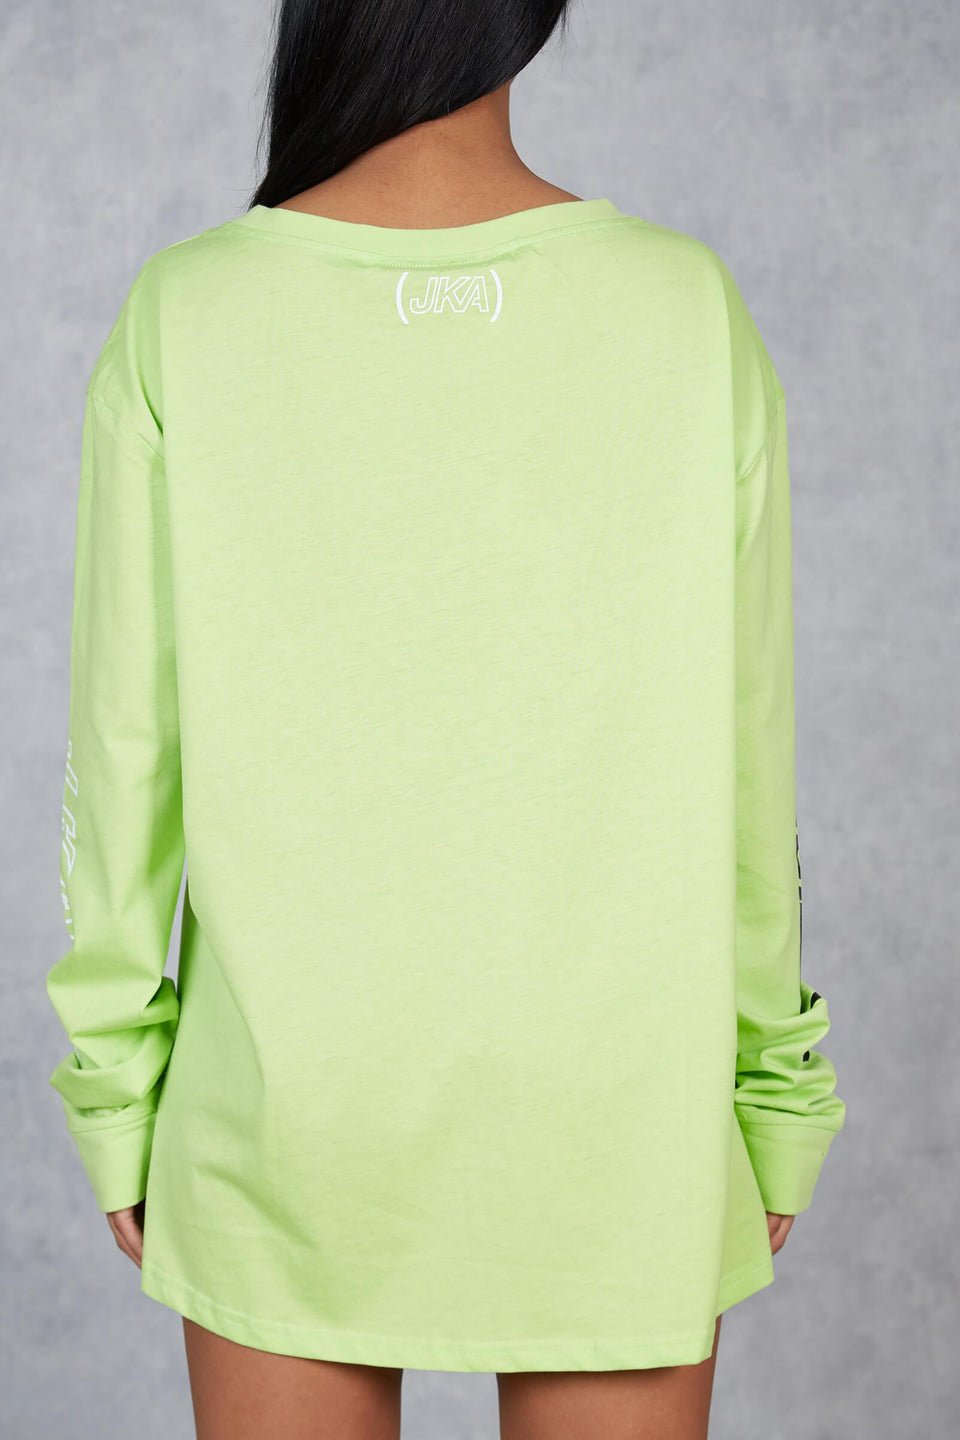 Drogon Oversized Long Sleeve T-Shirt Dress - Neon Green